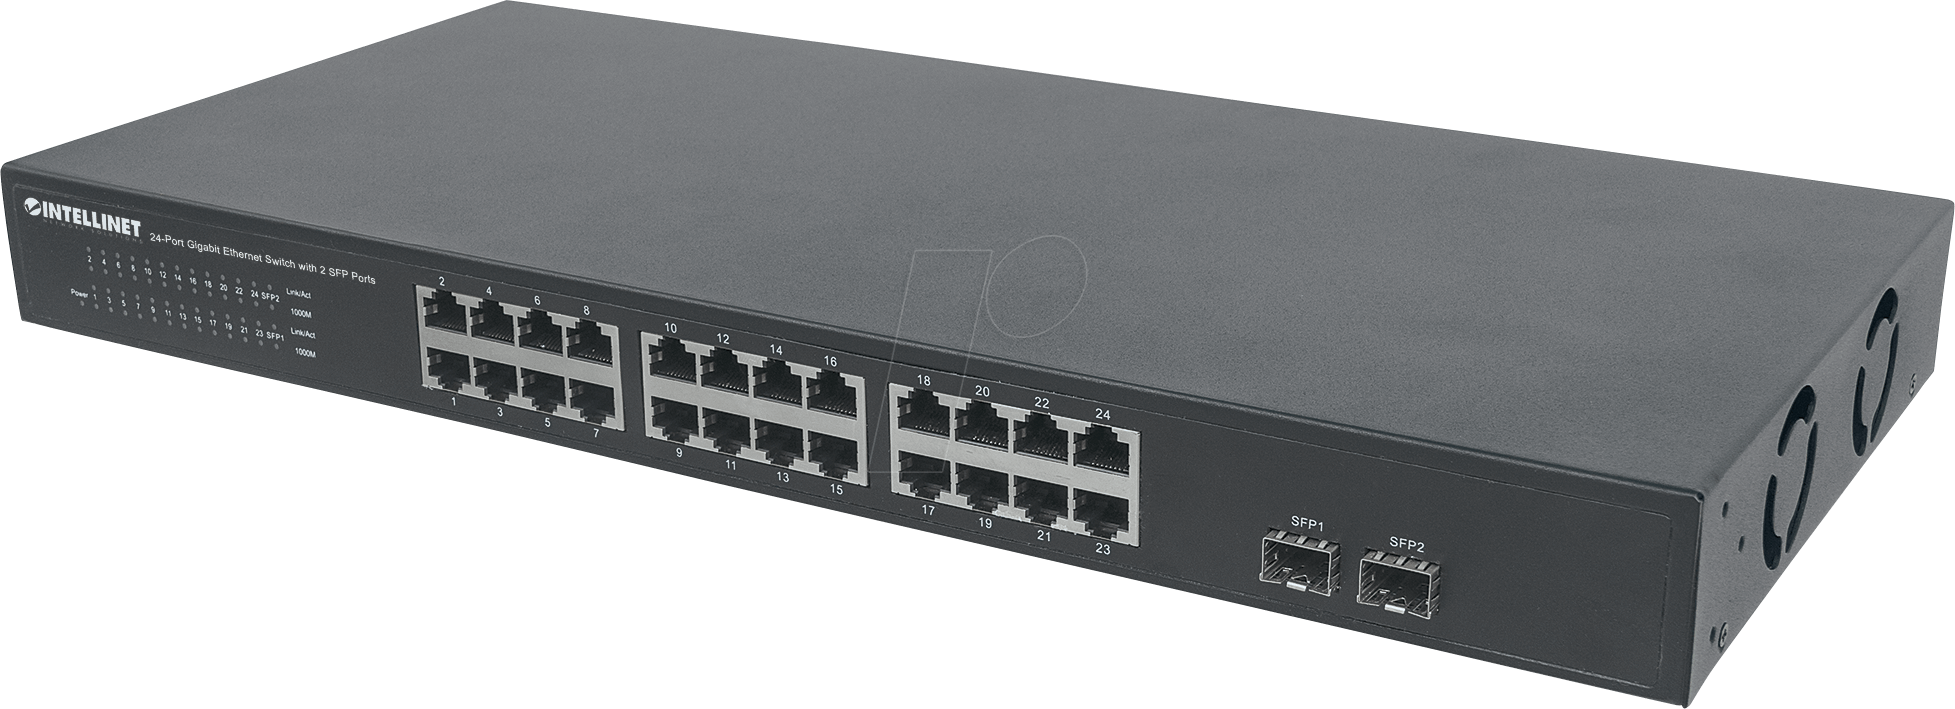 INT 561044: 24-Port Gigabit Ethernet Switch at reichelt elektronik